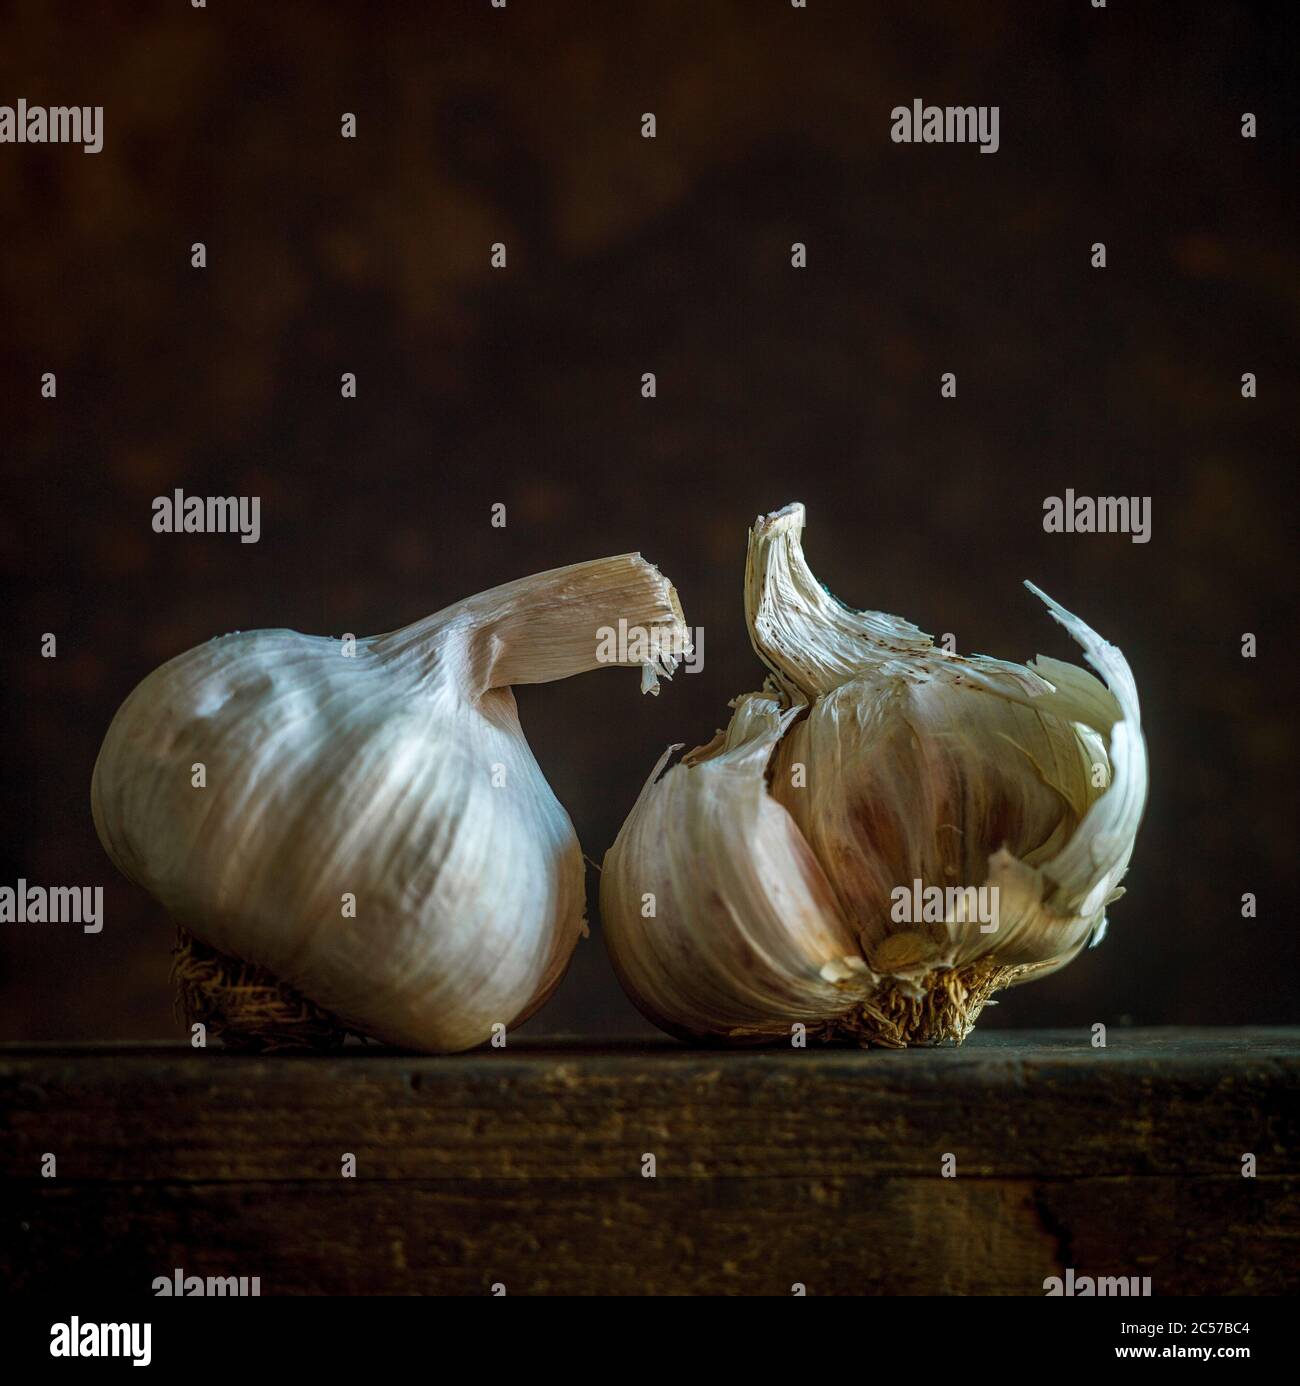 Closeup shot of fresh garlic on a wooden table Stock Photo